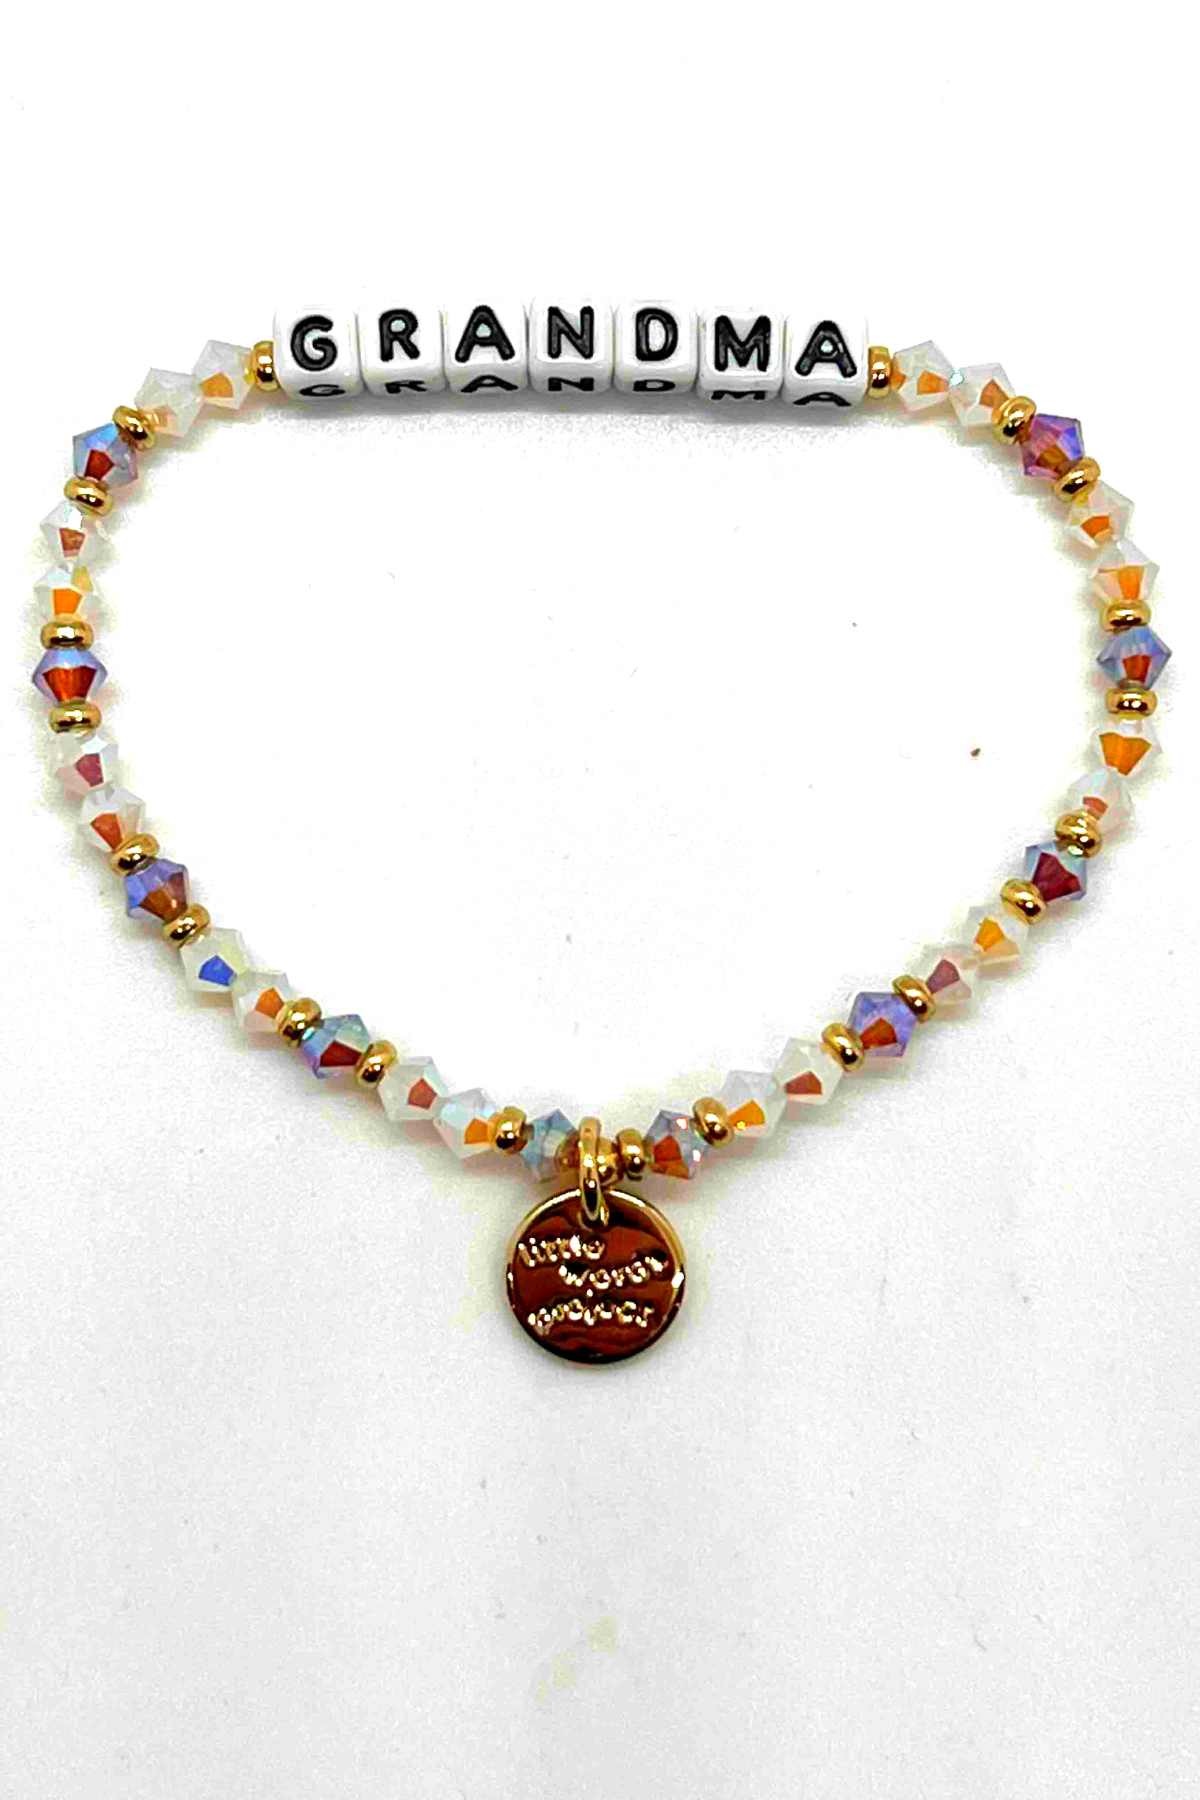 Grandma Crystal Word Bracelets by Little Words Project